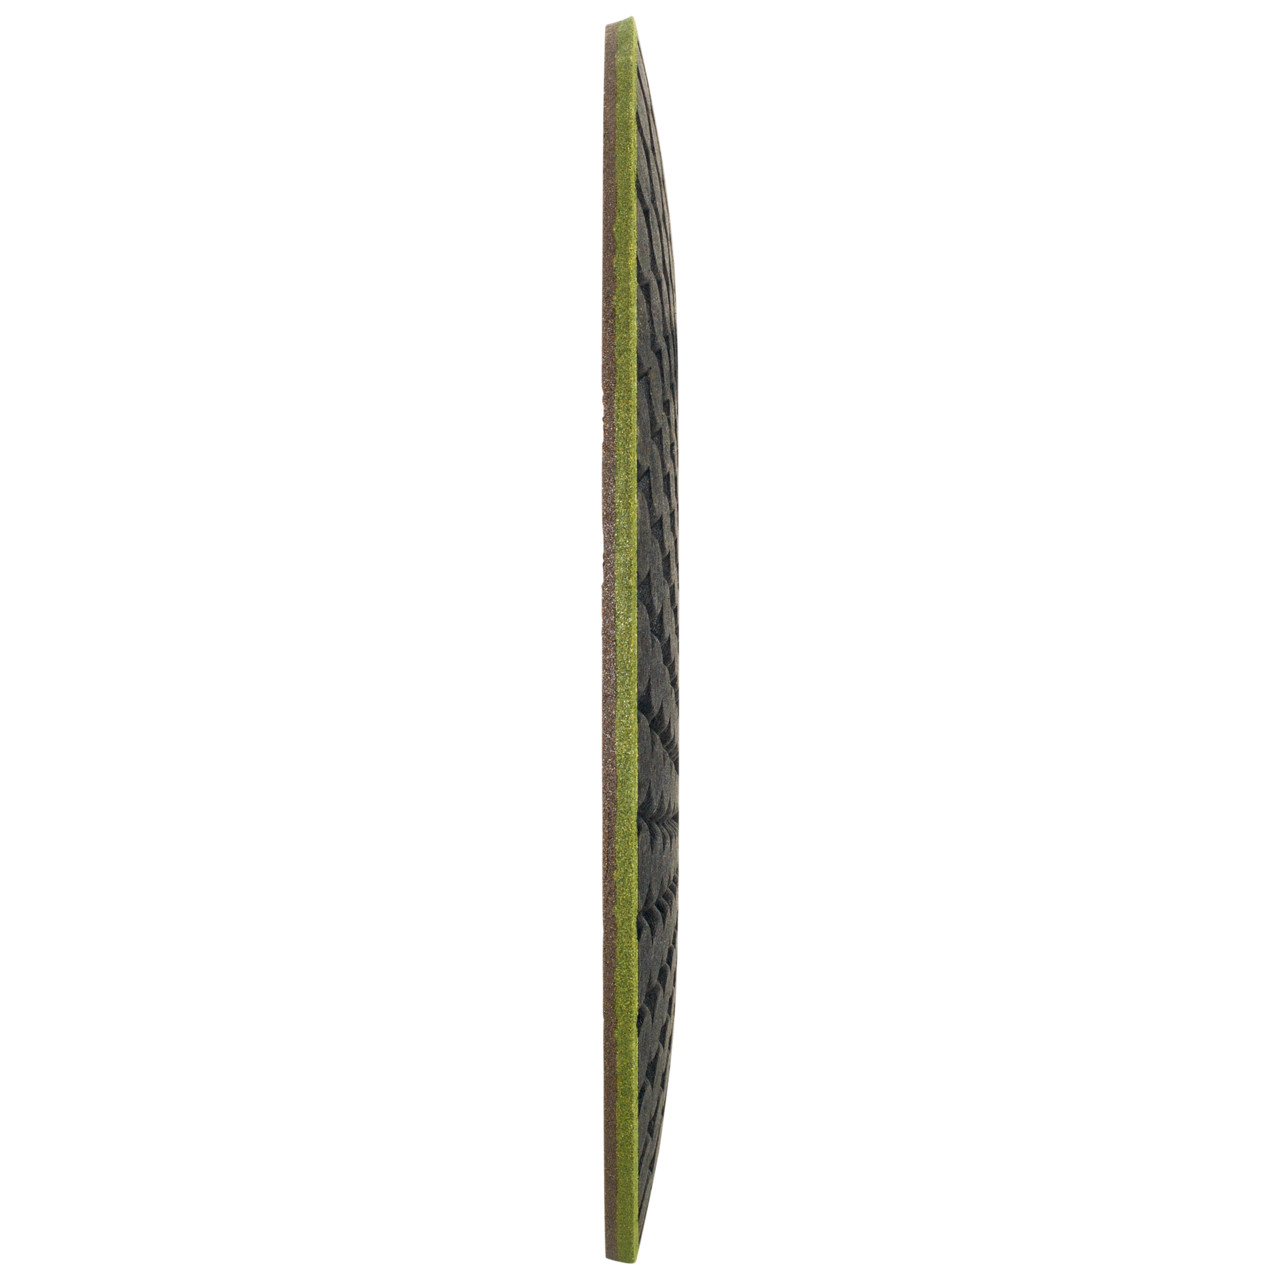 Tyrolit RONDELLER DxH 178x22,23 Para piedra, forma: 29RON (Rondeller®), Art. 908224